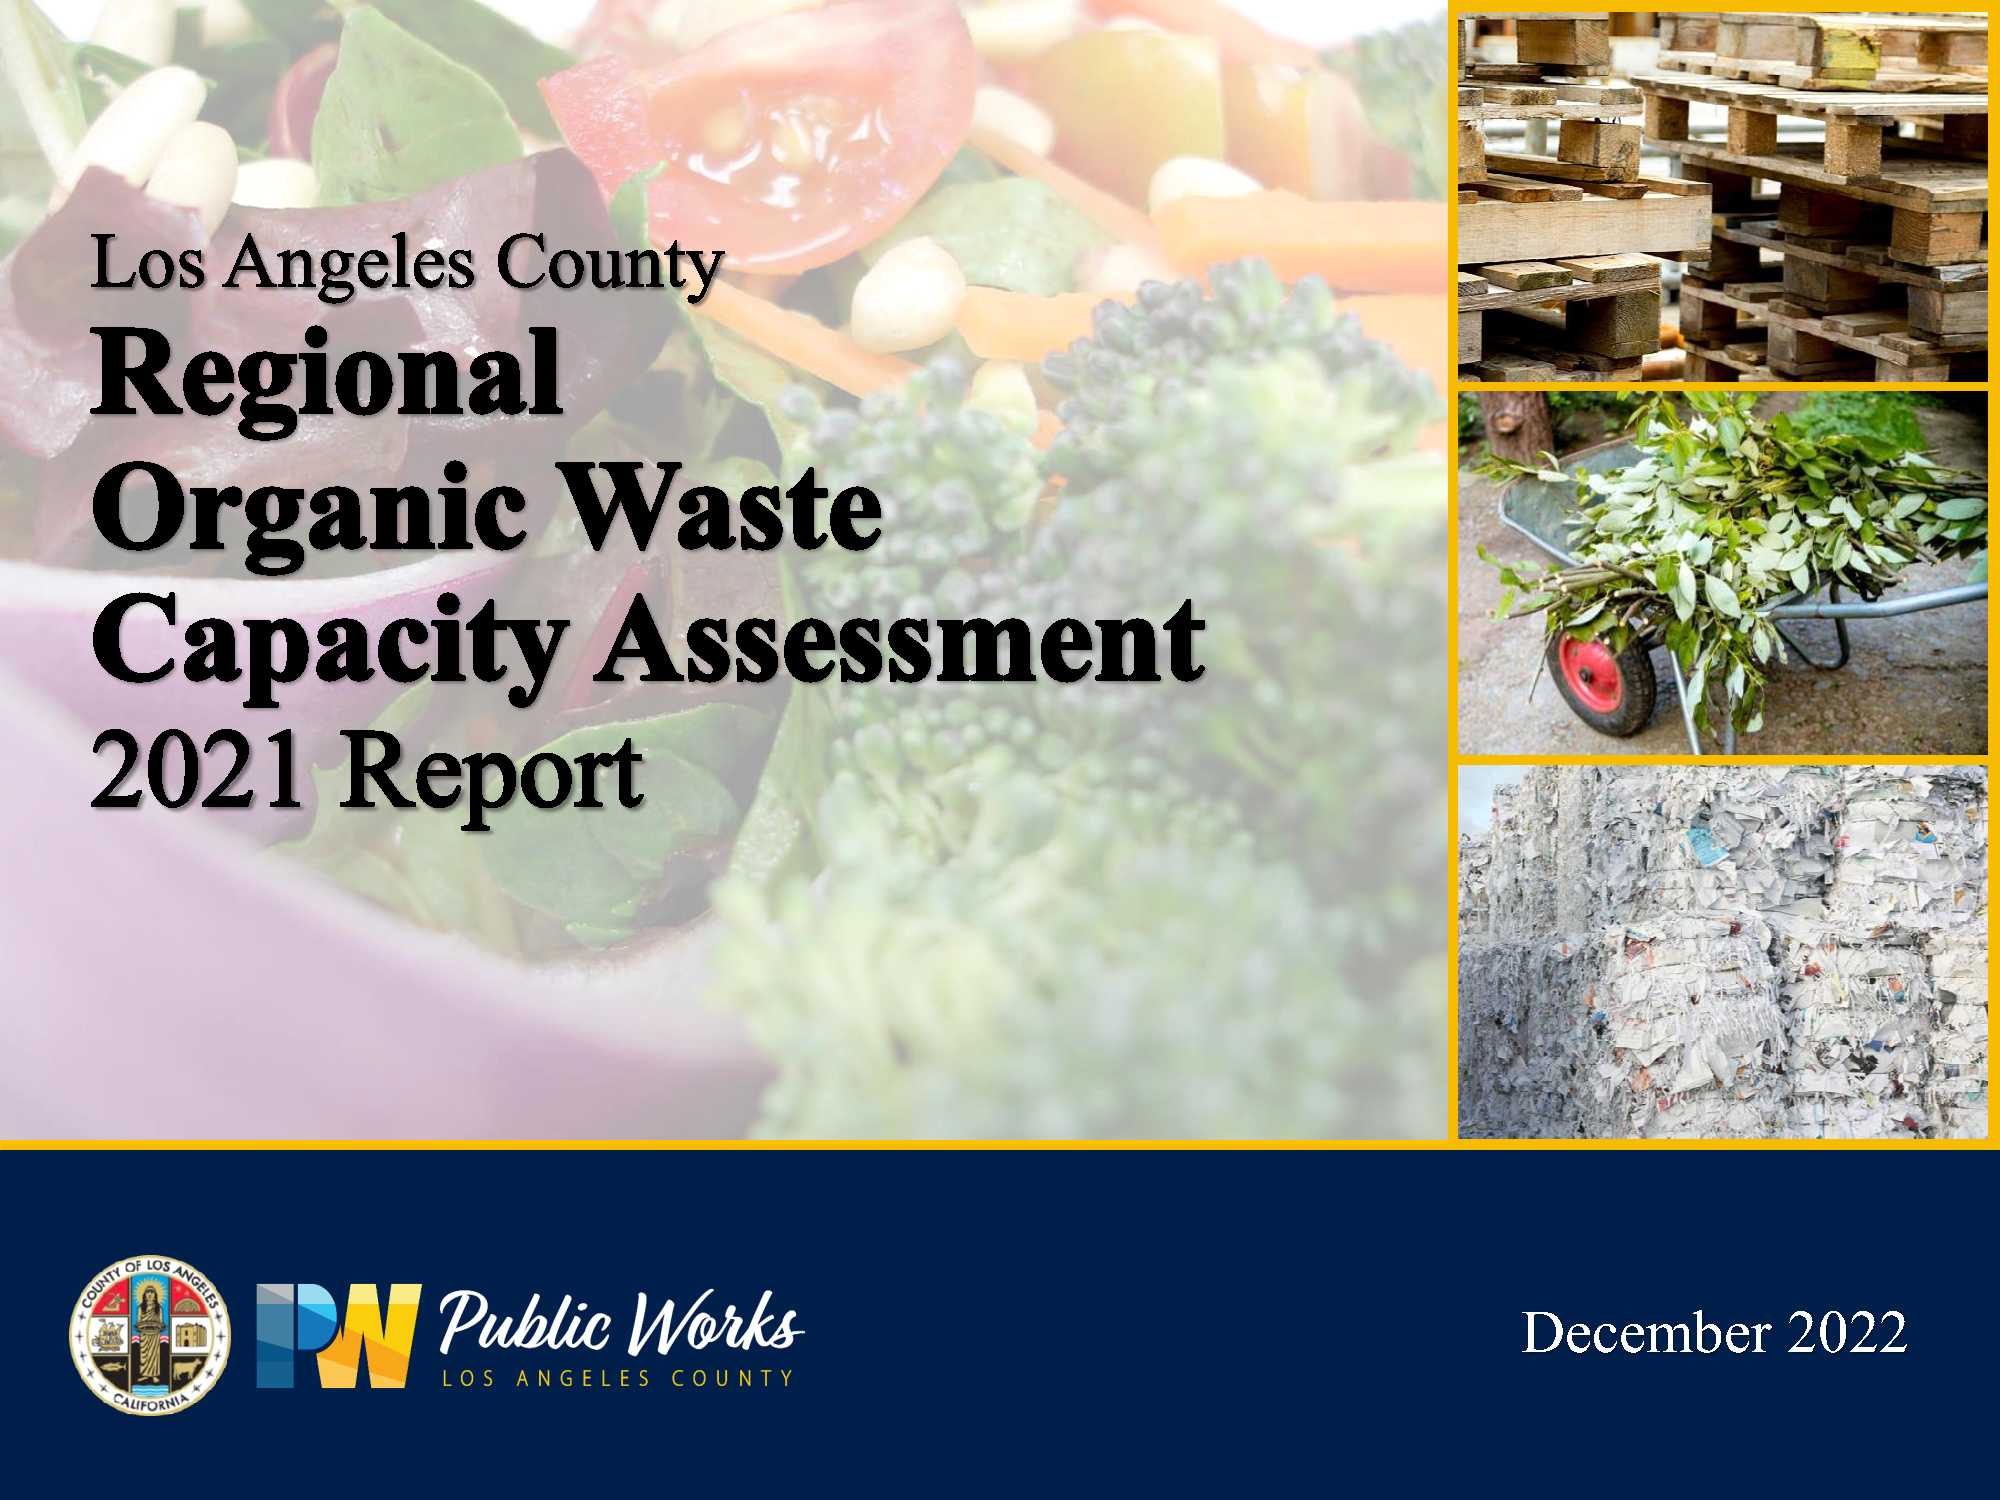 2021 Regional Organic Waste Capacity Assessment Report